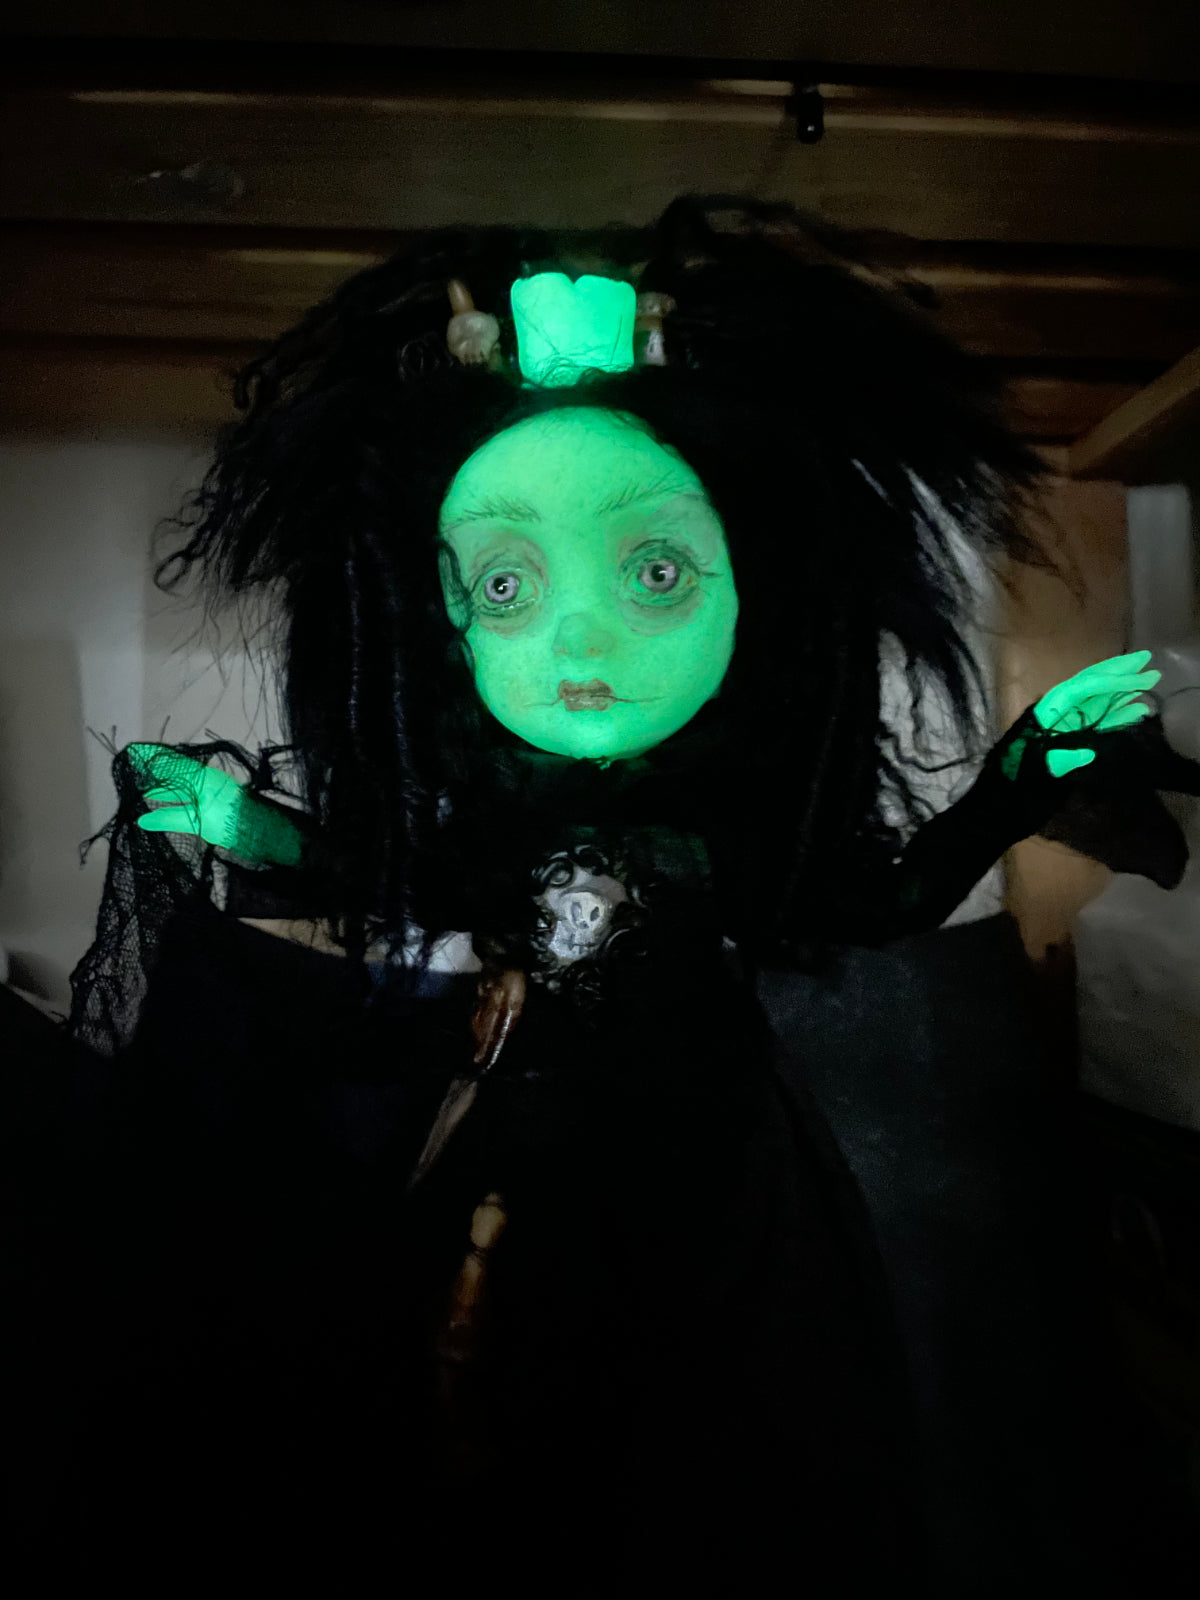 GlowSpire Witch Glow in the dark Original LuLu Lancaster Art Doll